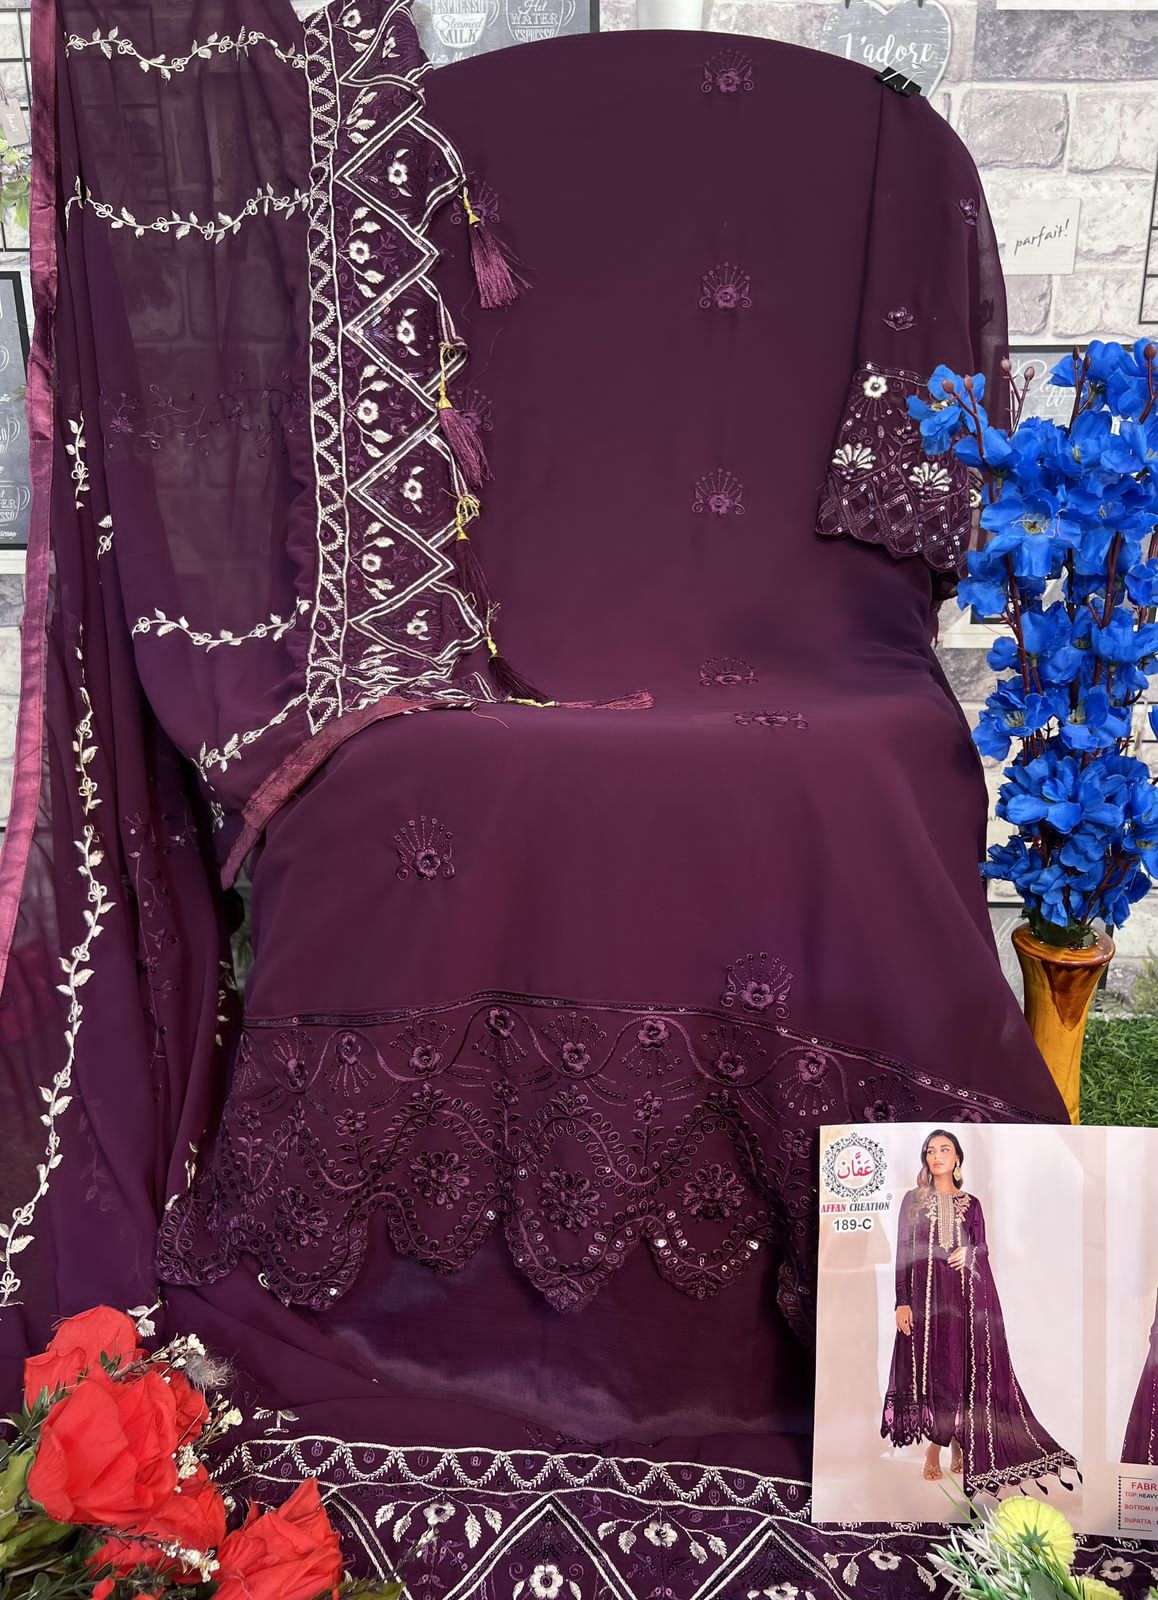 affan creation 189 colour designer pakistani salwar kameez at wholesaler price surat gujarat india